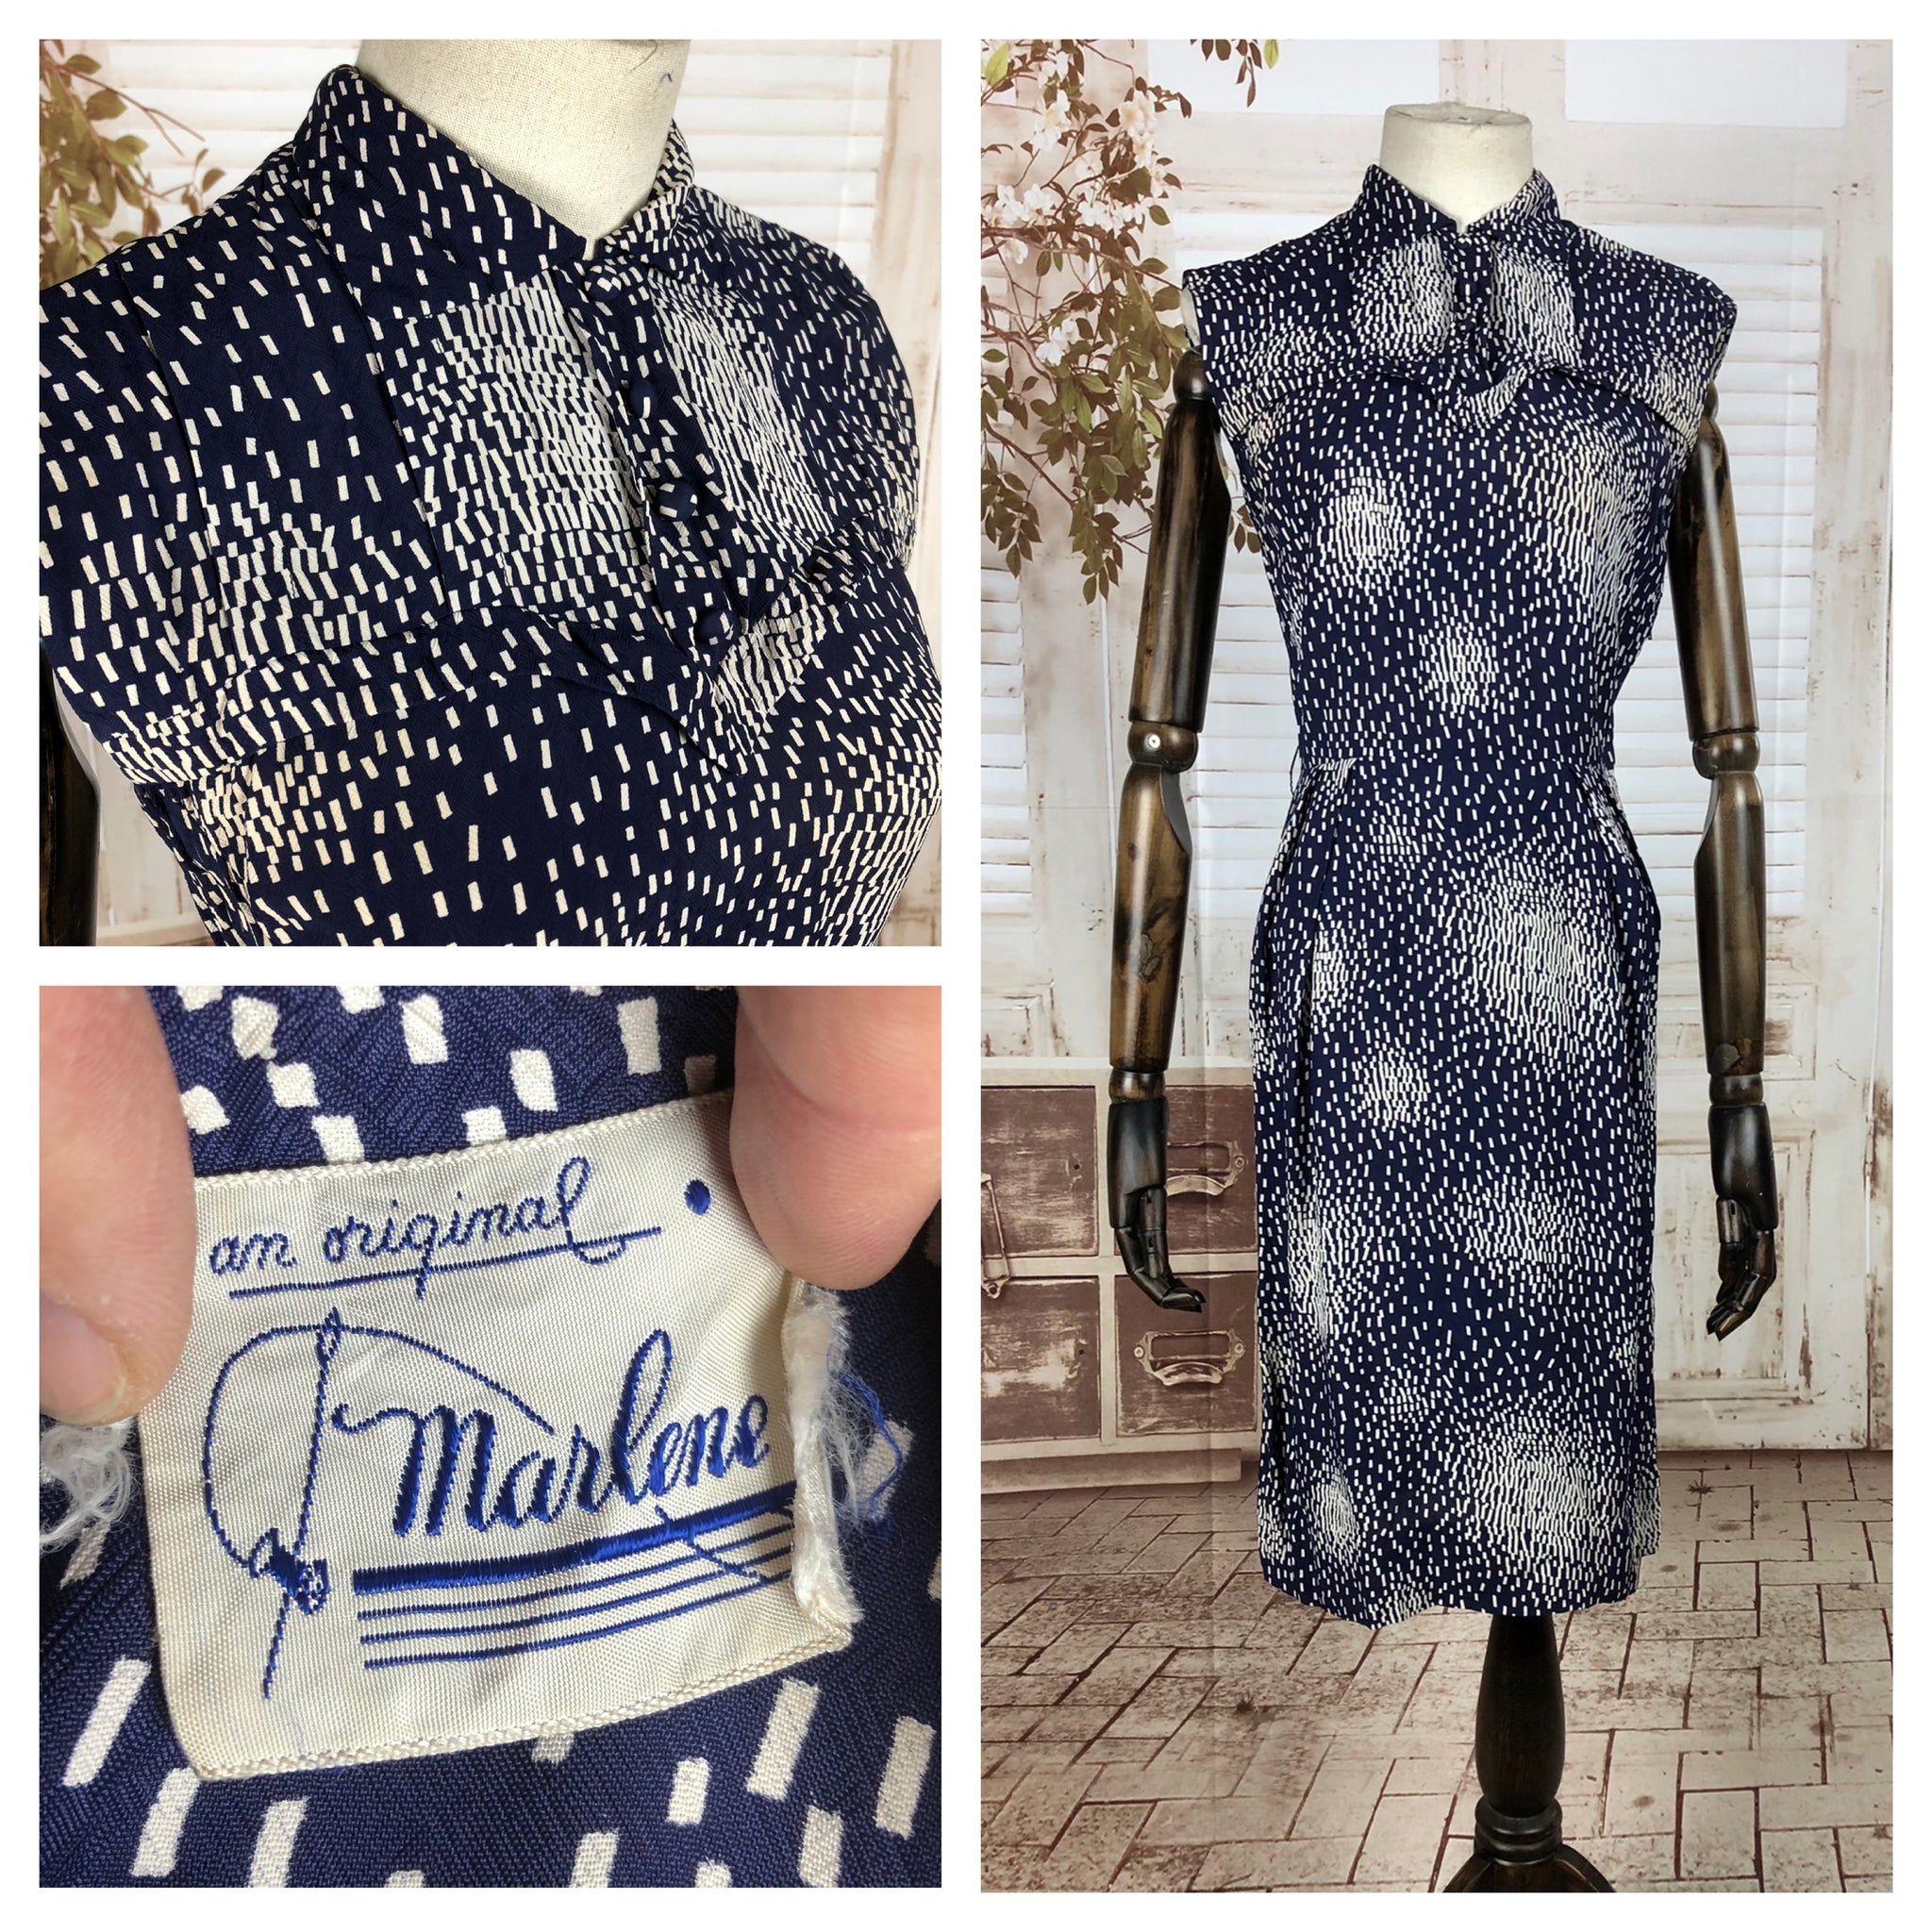 Original Vintage 1950s 50s Navy Blue And White Blot Pattern Rayon Dress By Marlene